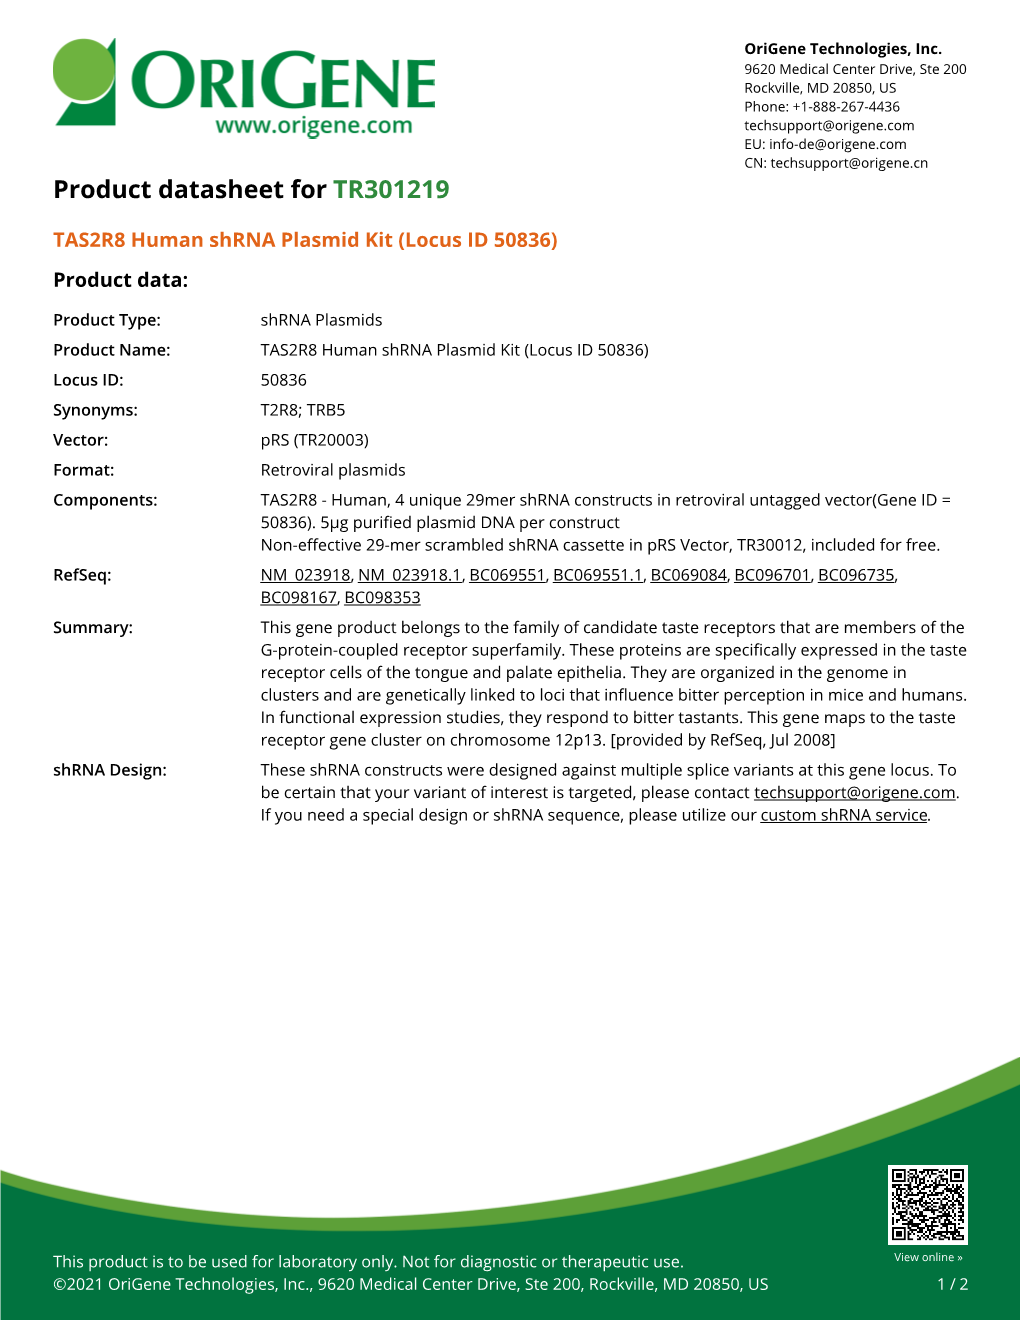 TAS2R8 Human Shrna Plasmid Kit (Locus ID 50836) Product Data